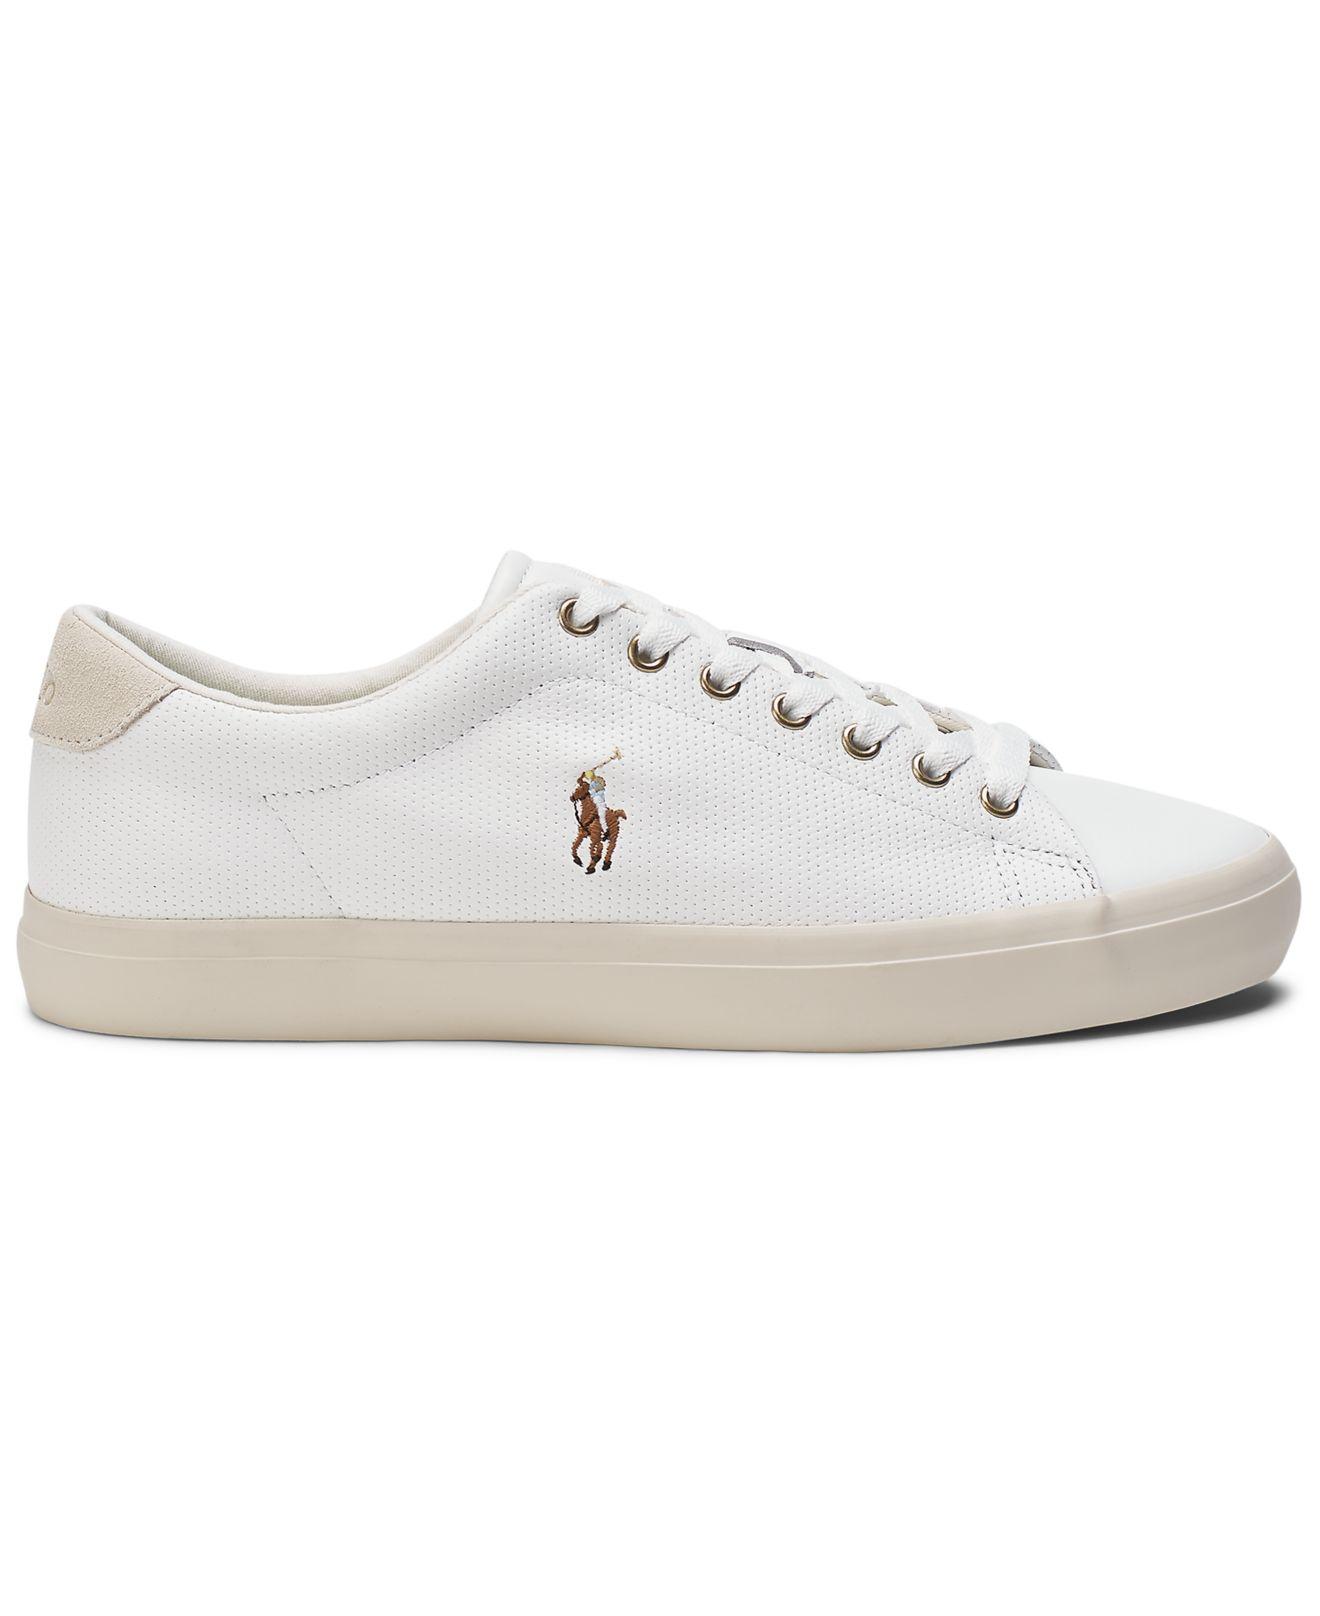 Polo Ralph Lauren Longwood Leather Sneaker in White/White (White) for Men -  Save 63% - Lyst